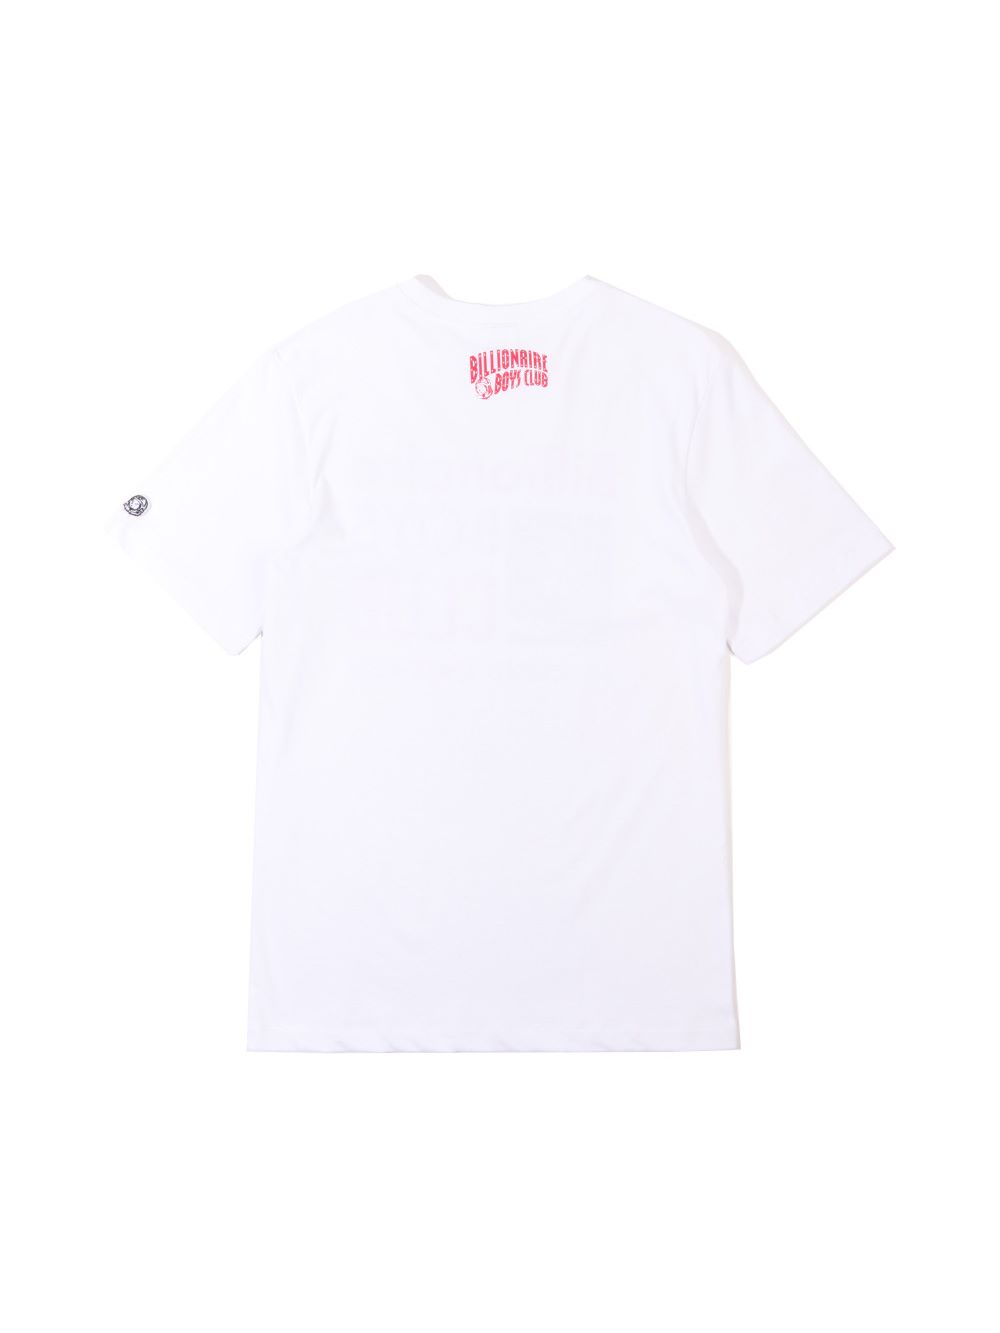 Billionaire Boys Club Processed T-Shirt in White | Dapper Street